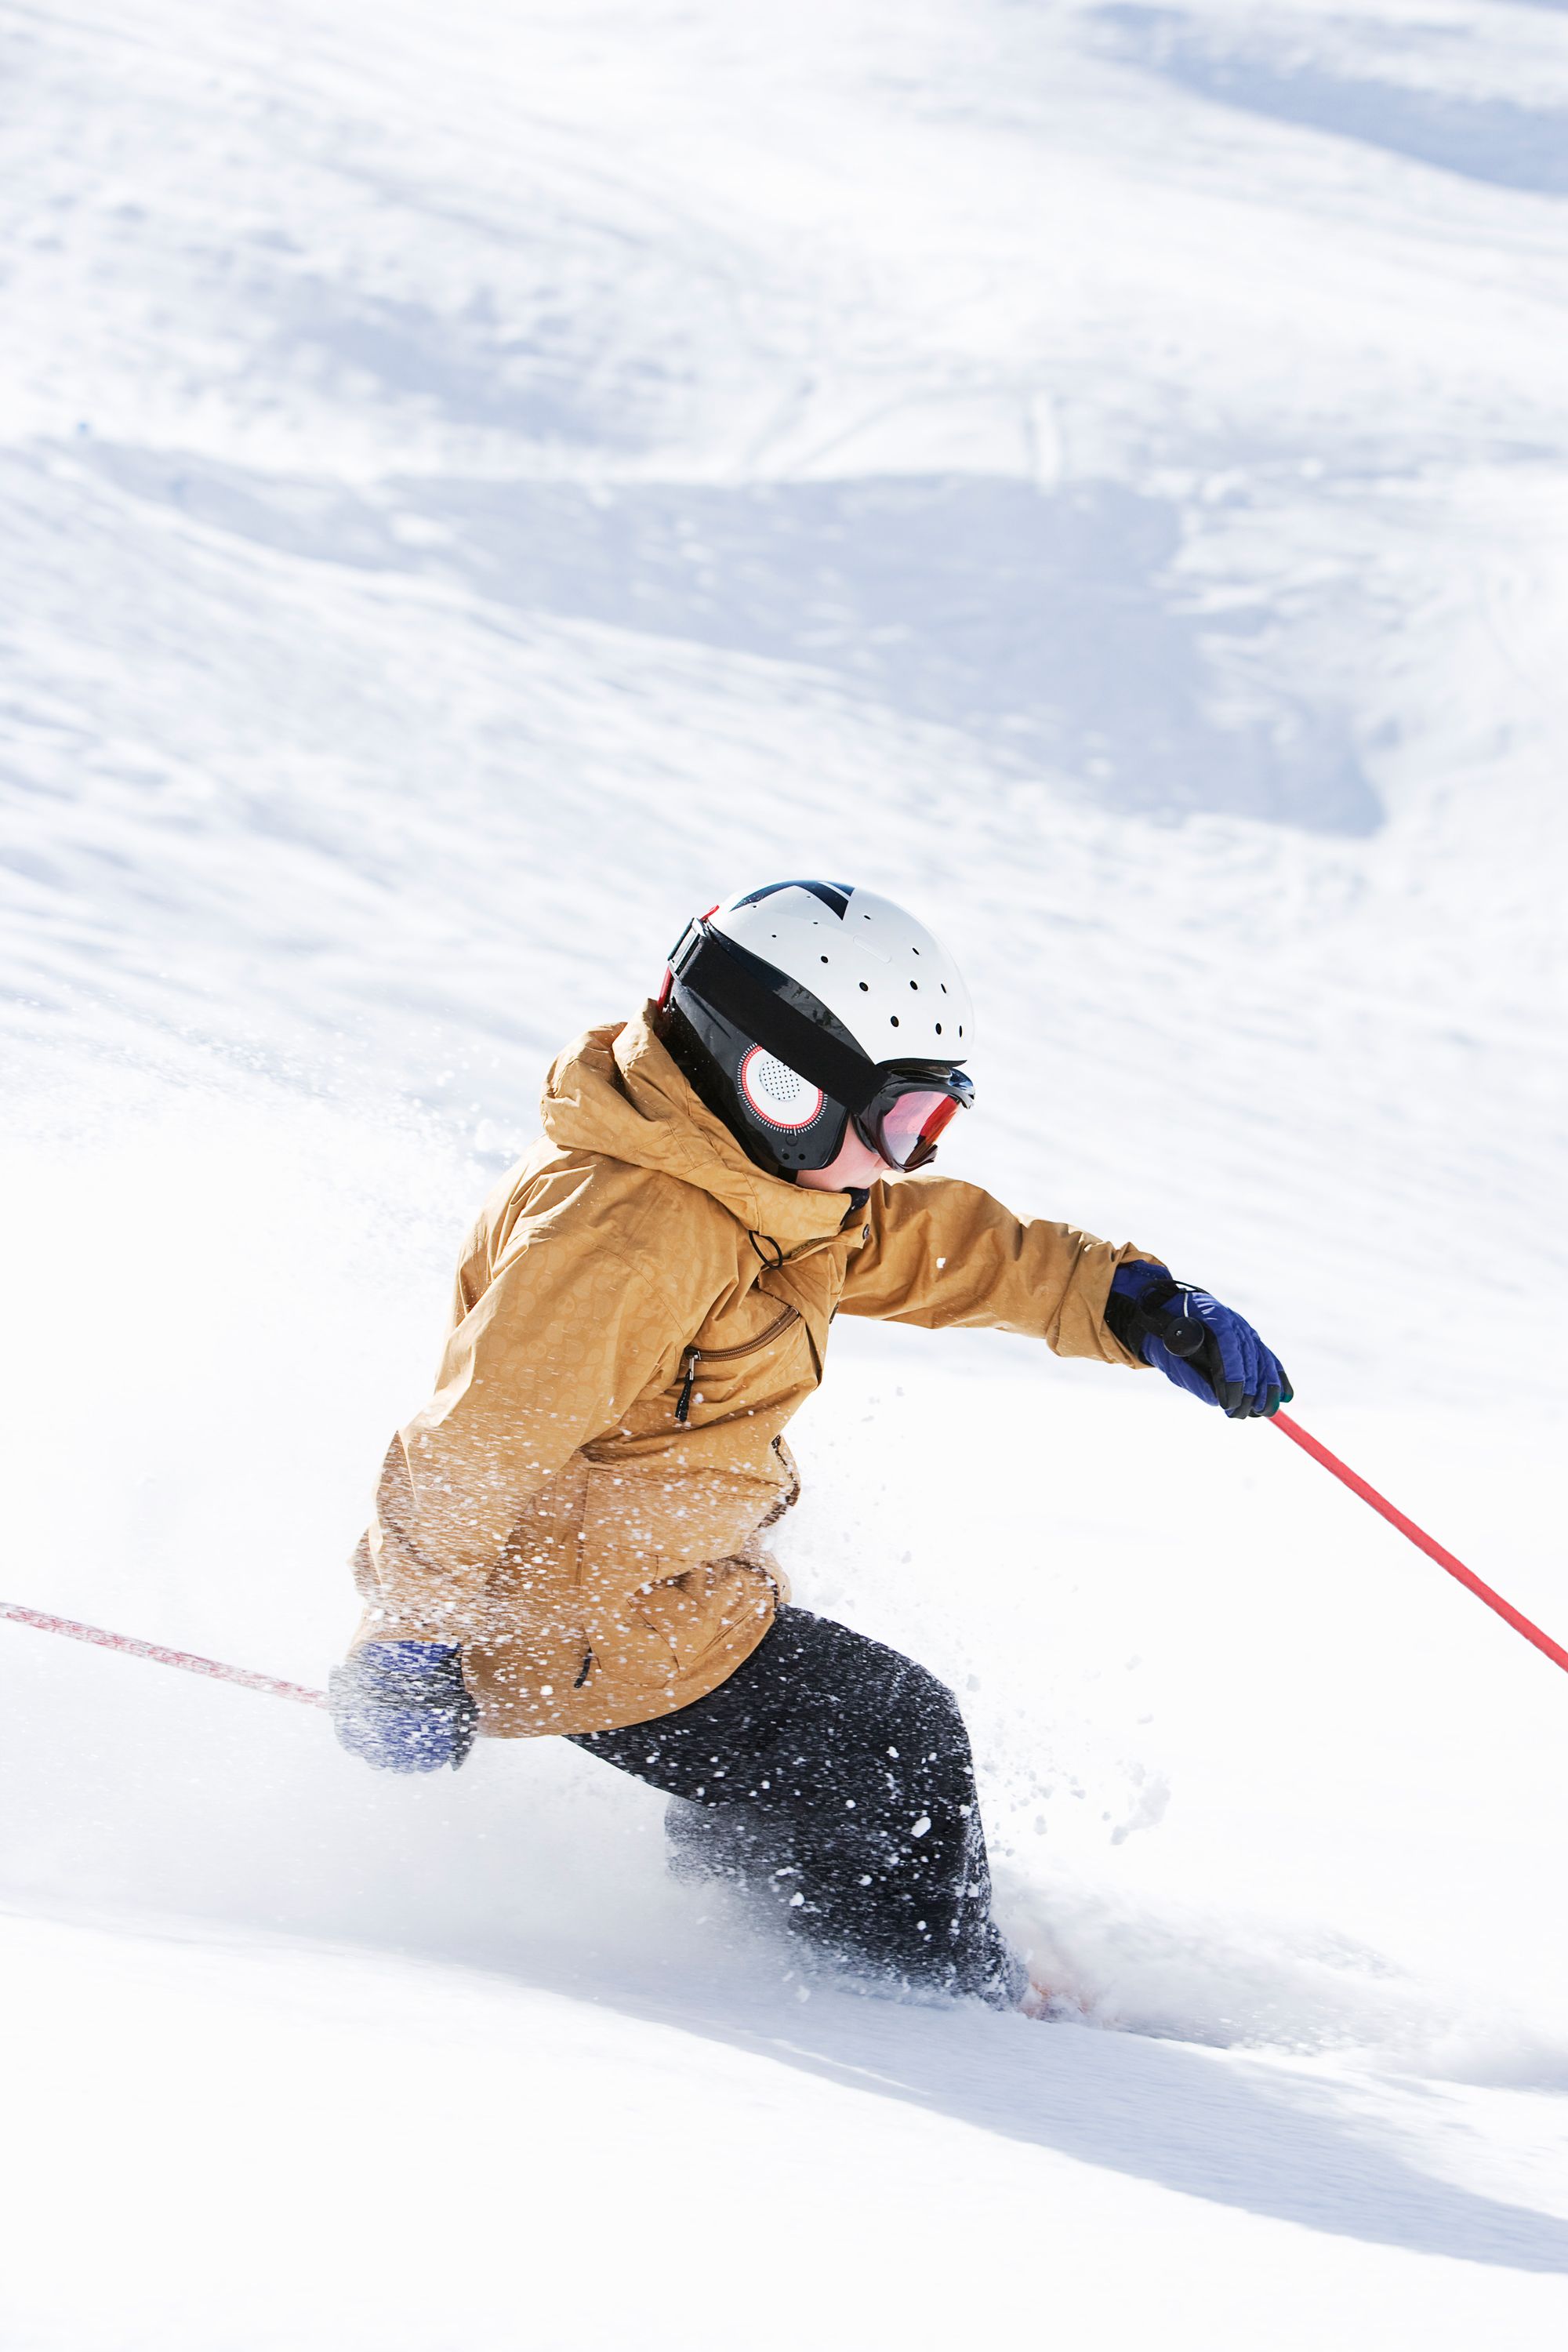 ZOEKIM Snow Mittens Waterproof Ski Gloves Unisex Winter Skiing Mittens for Kids Toddlers